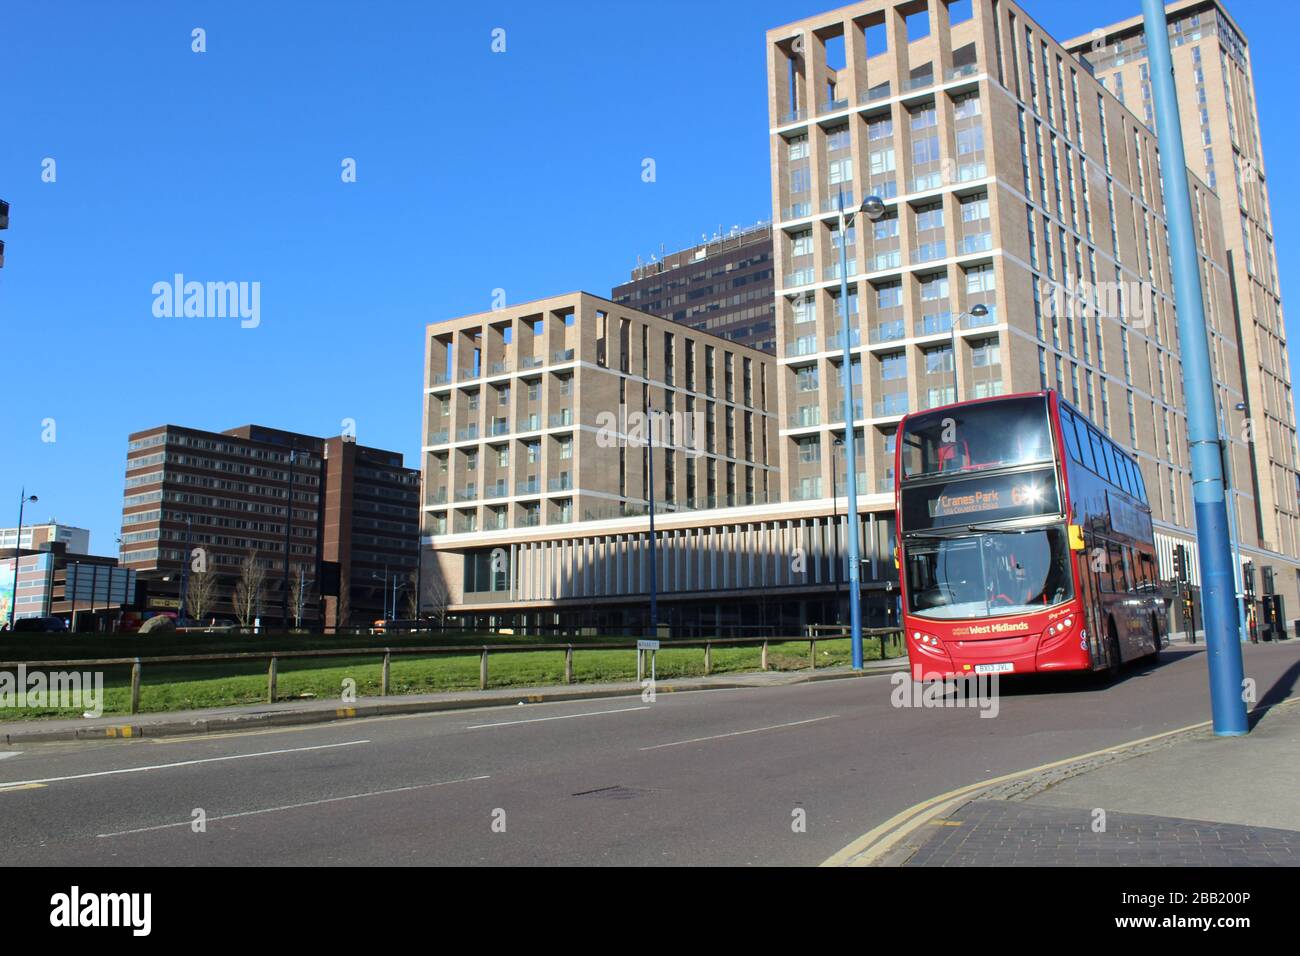 Photos taken during the Coronavirus Pandemic 2020 in the UK, Birmingham City Centre Stock Photo